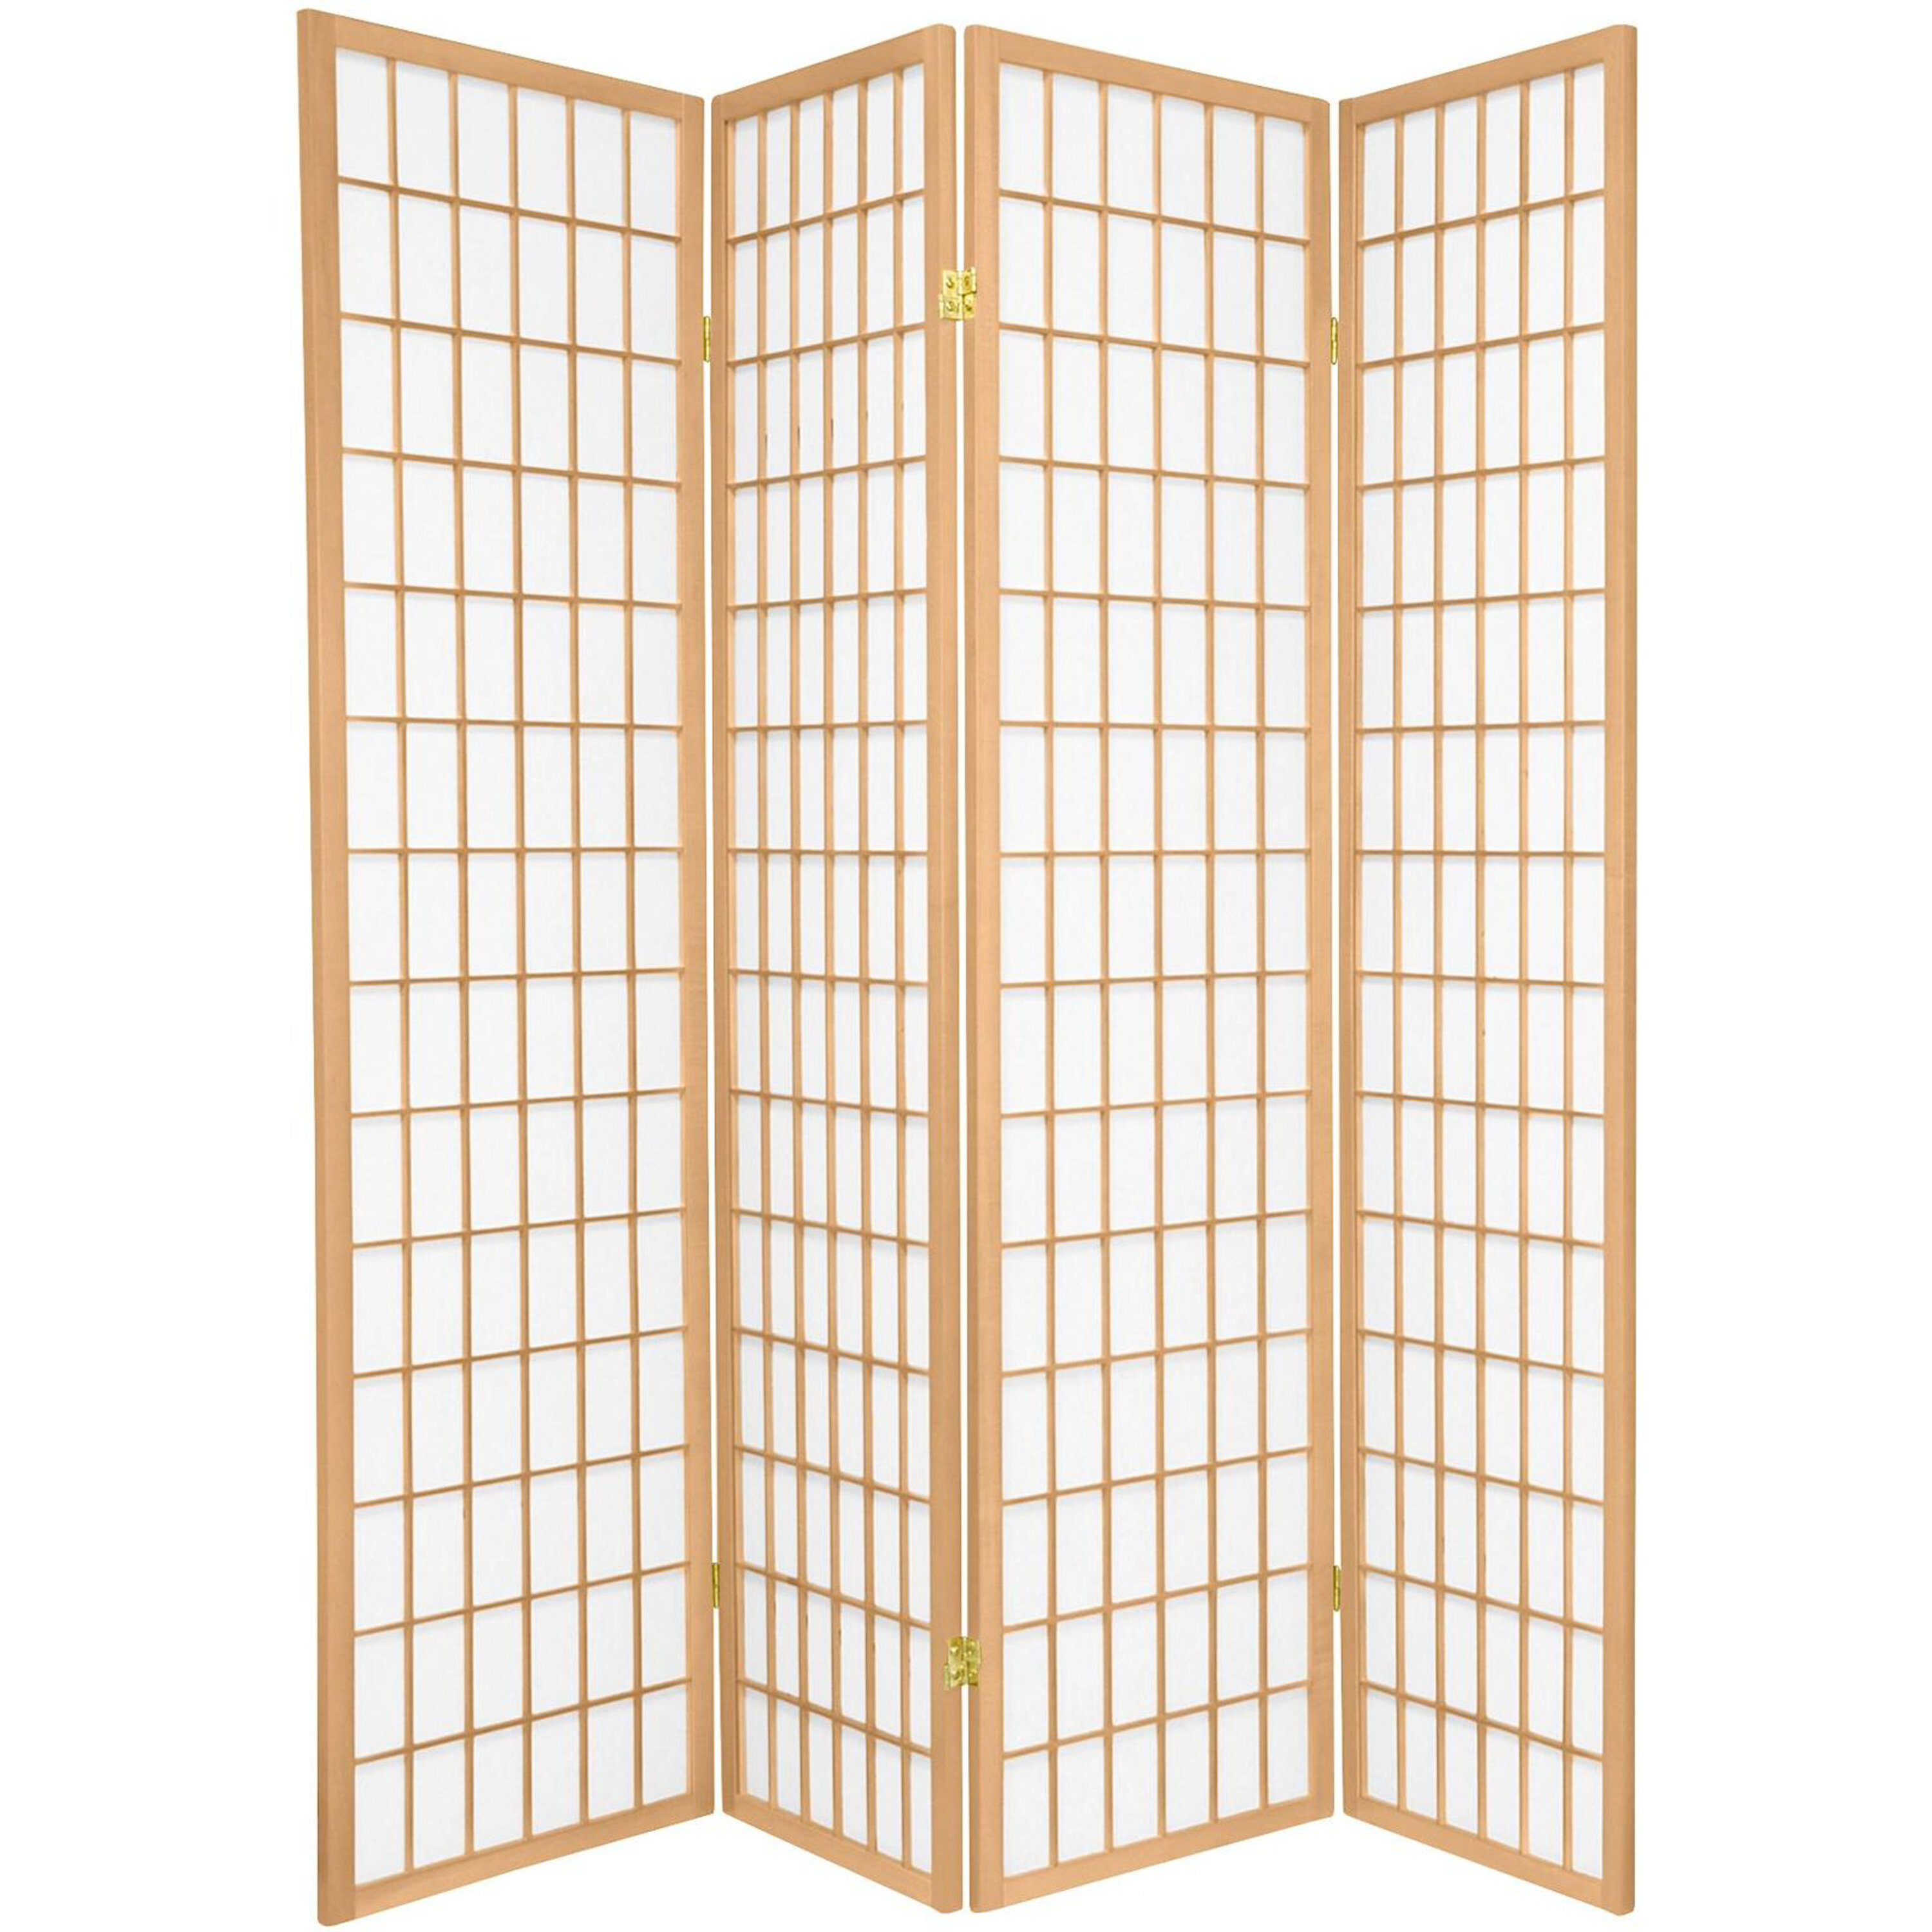 3,4,5,6,8 Panel Japanese-Oriental Style Shoji Screen Room Divider Black Color 